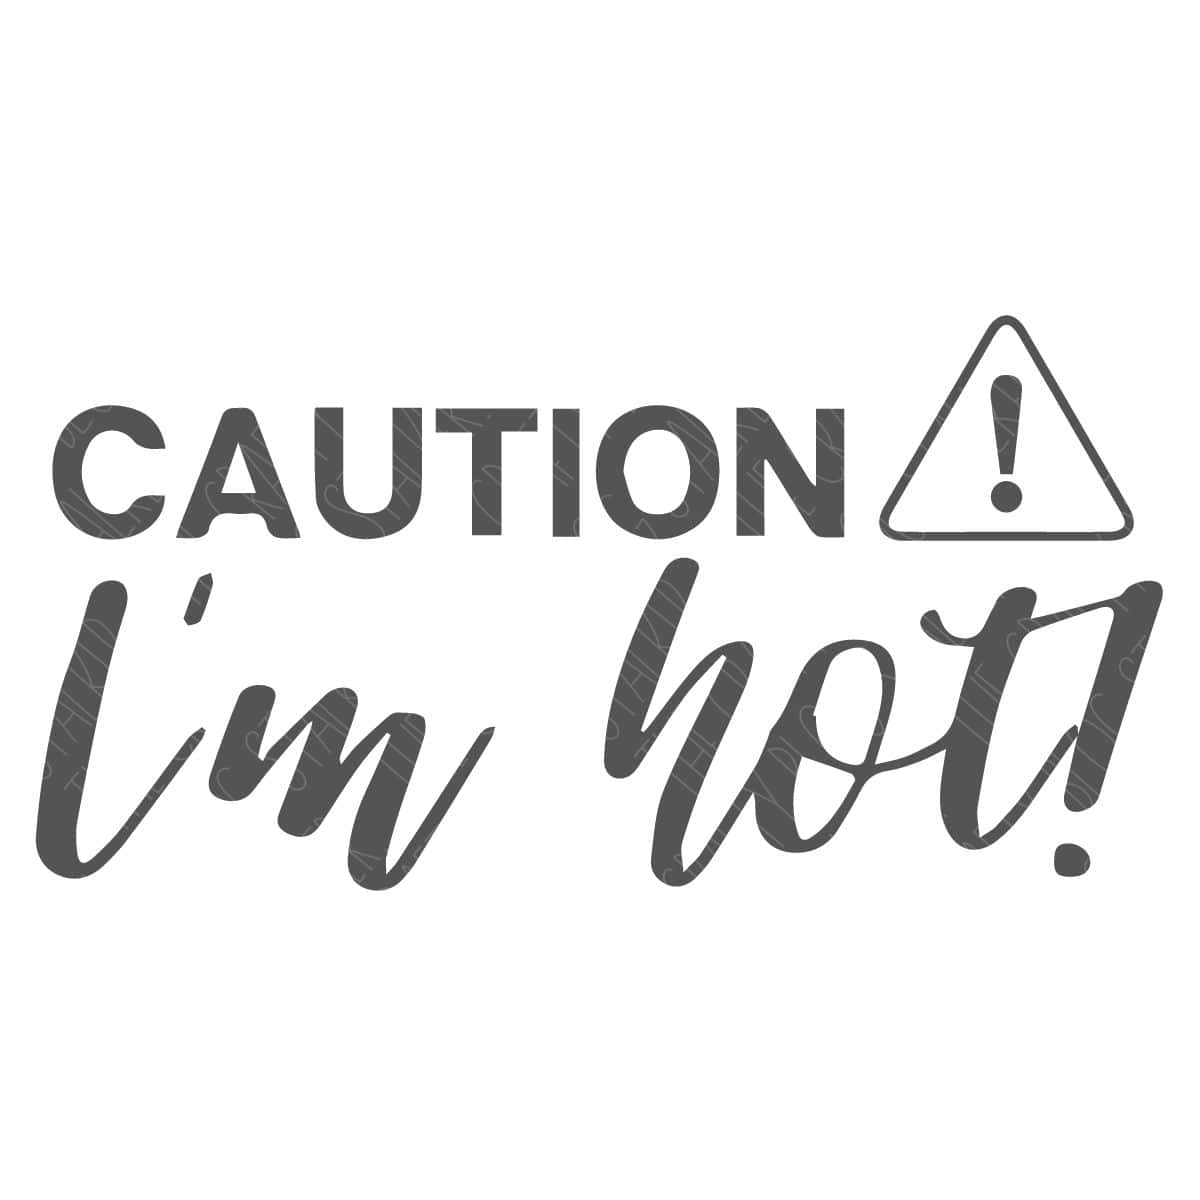 SVG Cut File: Caution - I'm hot.